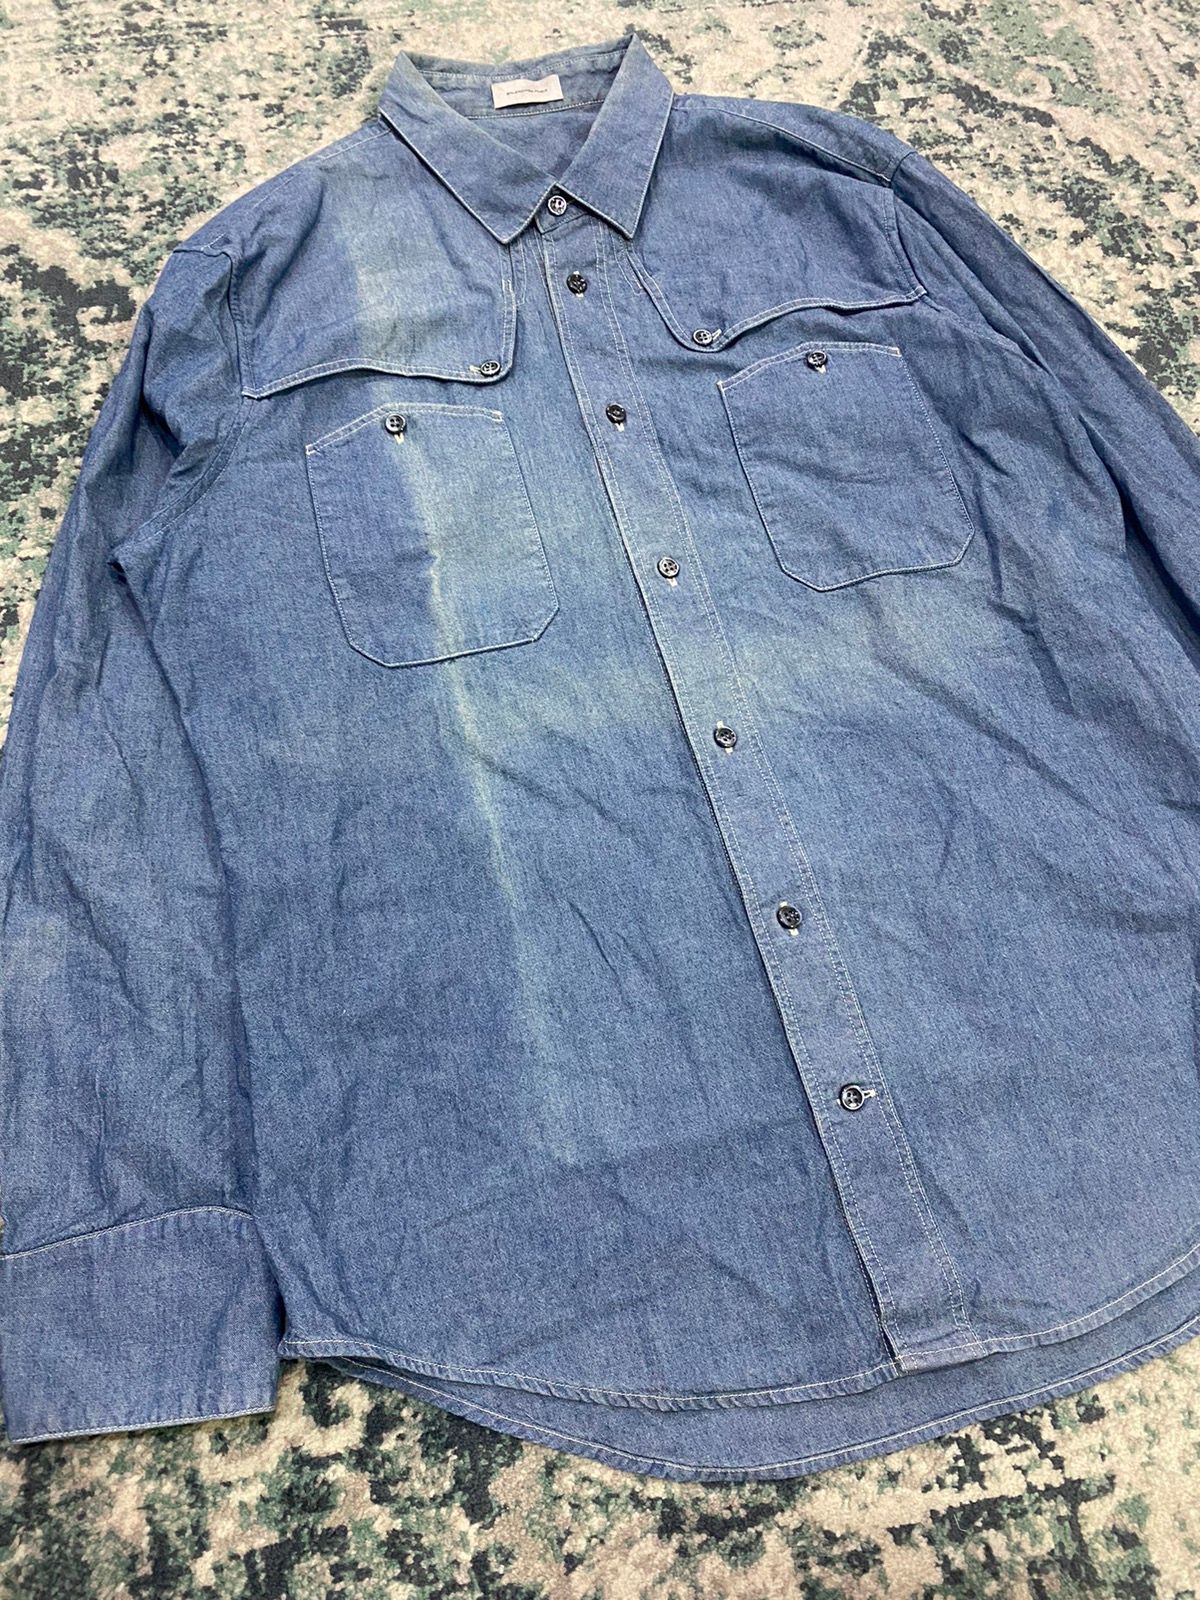 AW09 Balenciaga Paris Faded Hidden Pocket Denim Shirt - 10